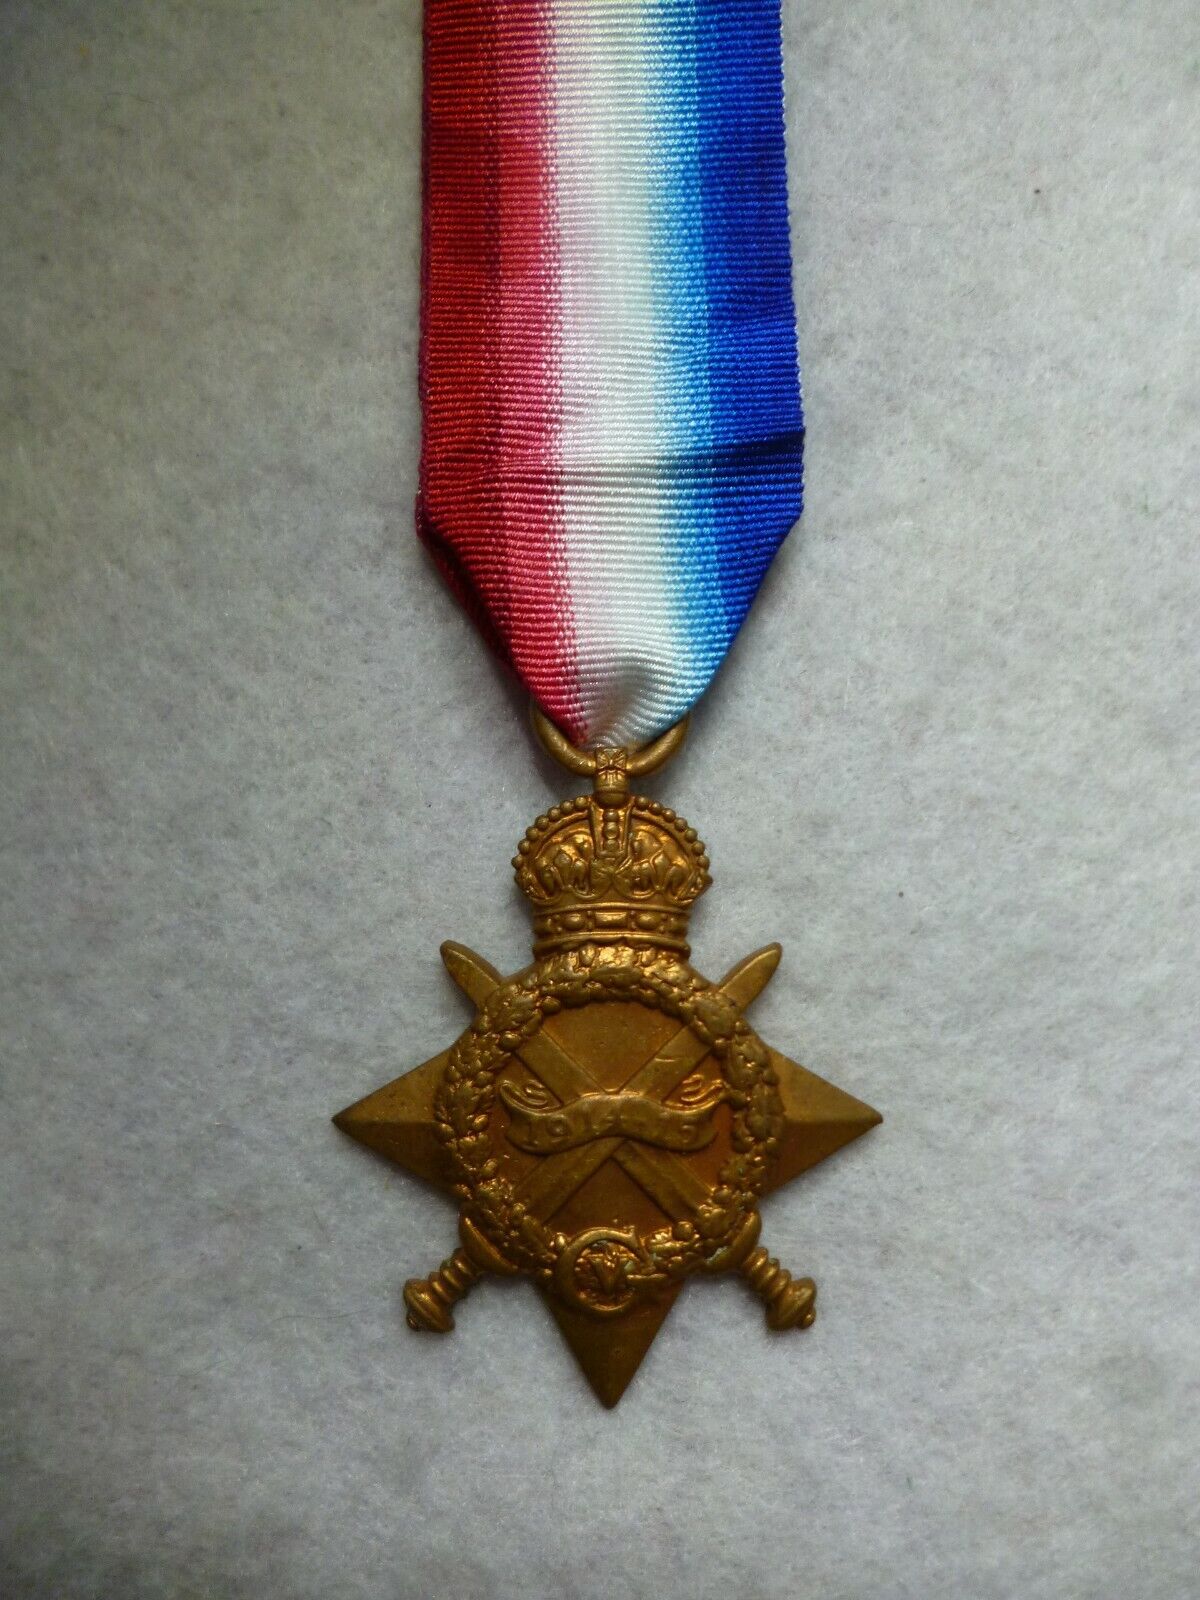 Ww1 1914/15 Star Medal To Sepoy Pir Dad, 33rd Punjabis, Indian Army